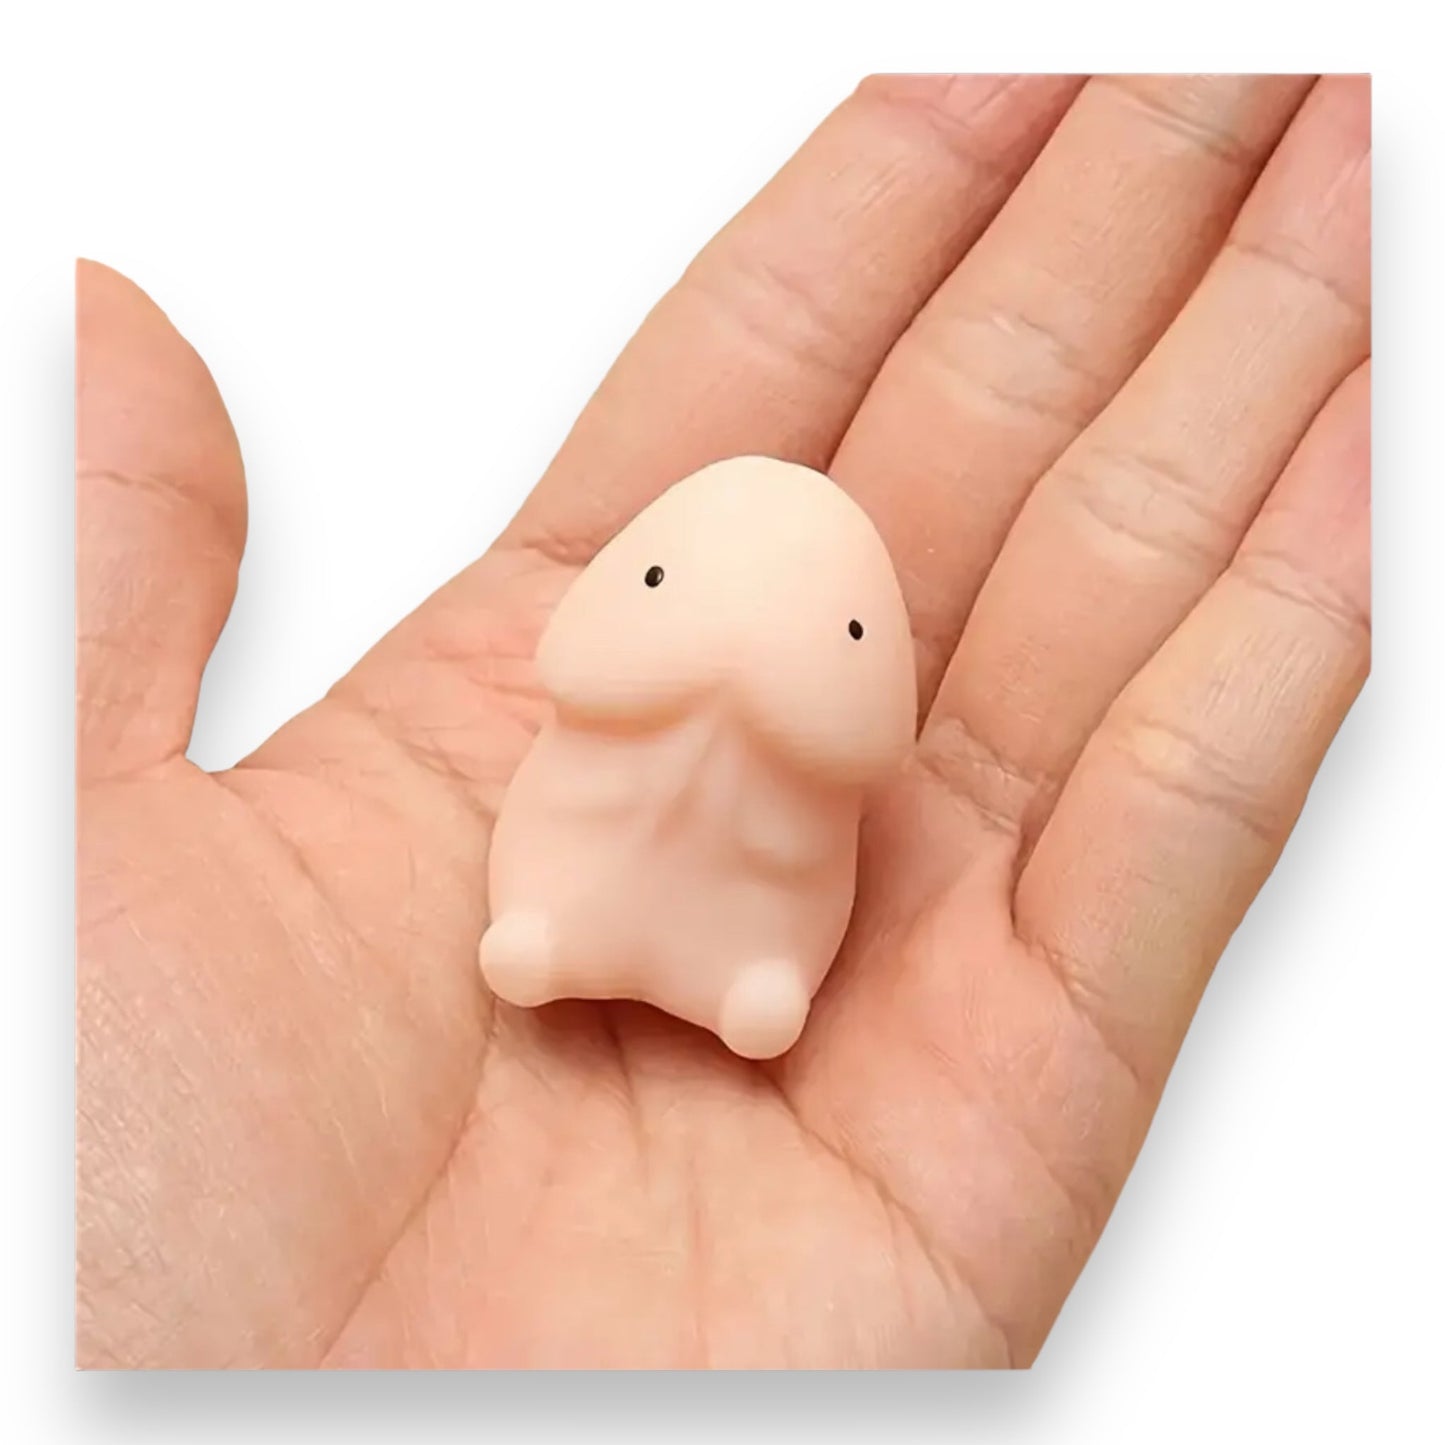 Mini Penis Squeezy Stress Toy - 4x3cm